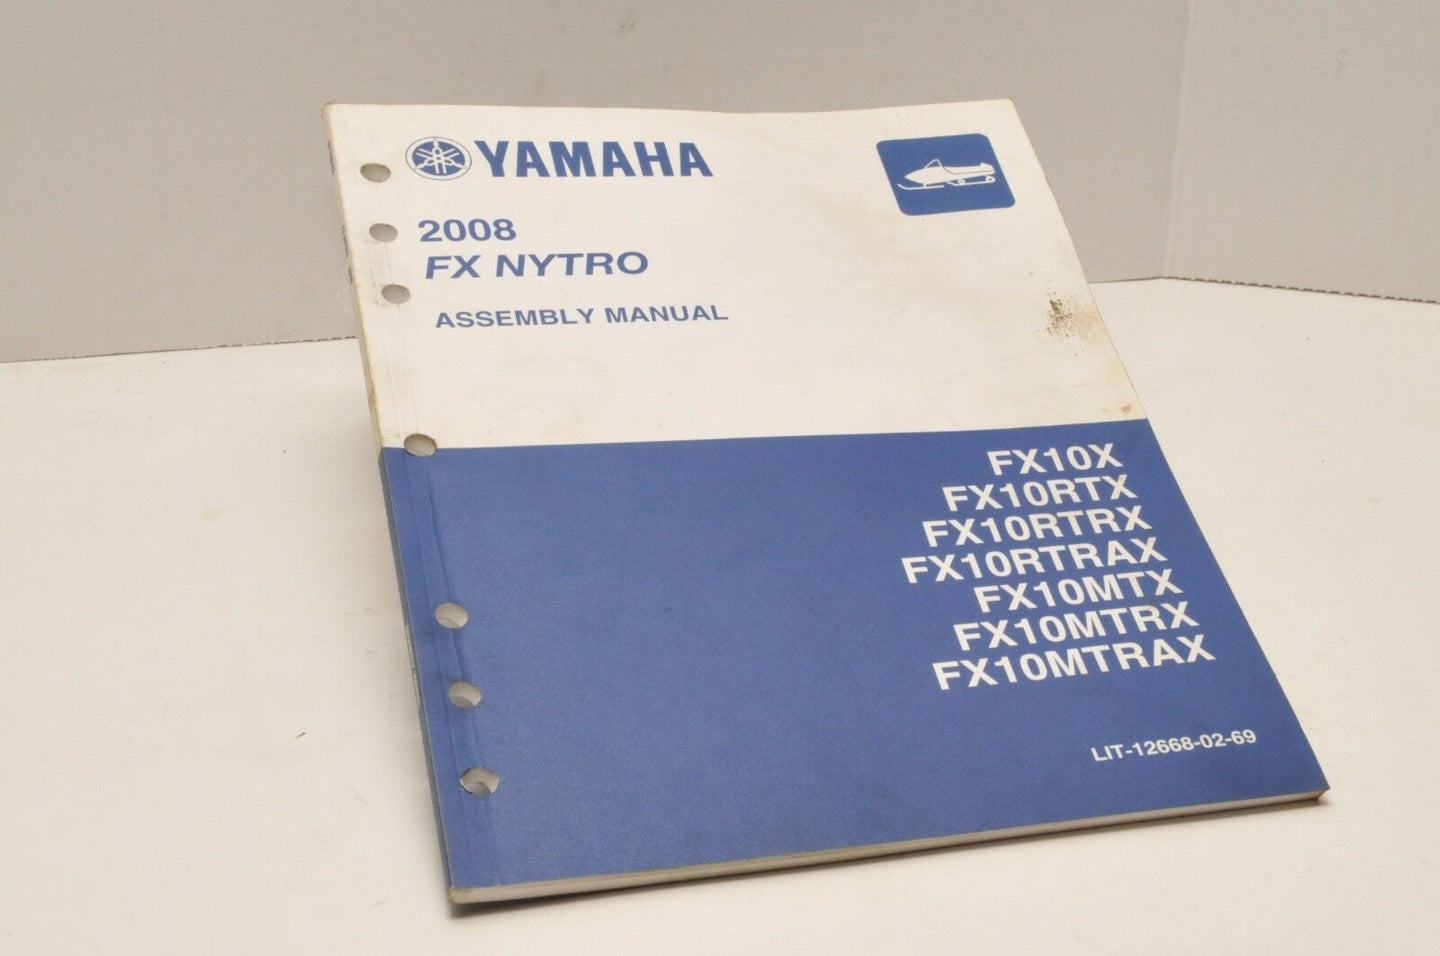 Genuine Yamaha FACTORY ASSEMBLY SETUP MANUAL FX NYTRO 2008 LIT-12668-02-69